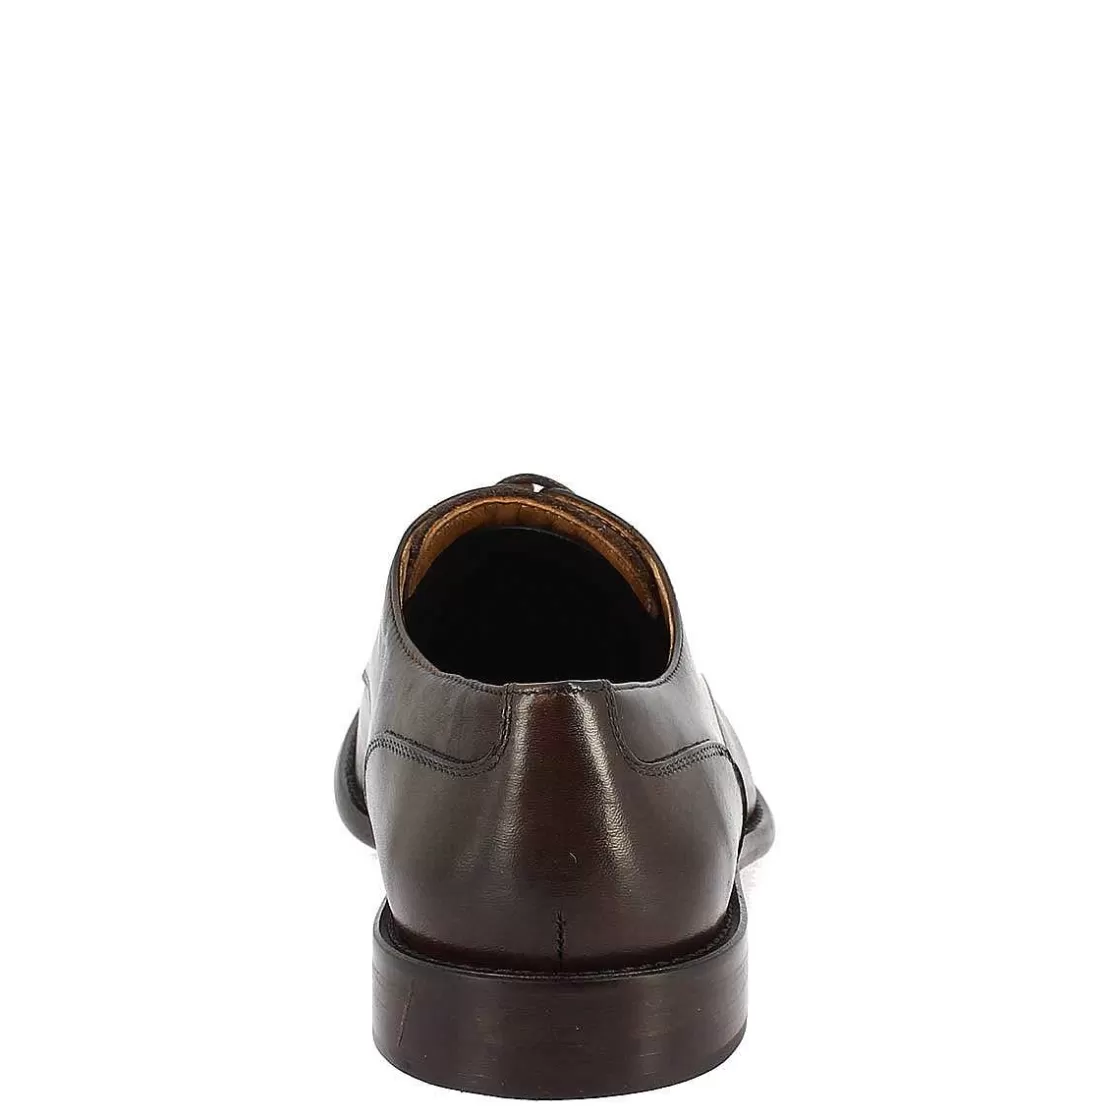 Leonardo Handmade Men'S Oxford Shoes In Dark Brown Leather Hot